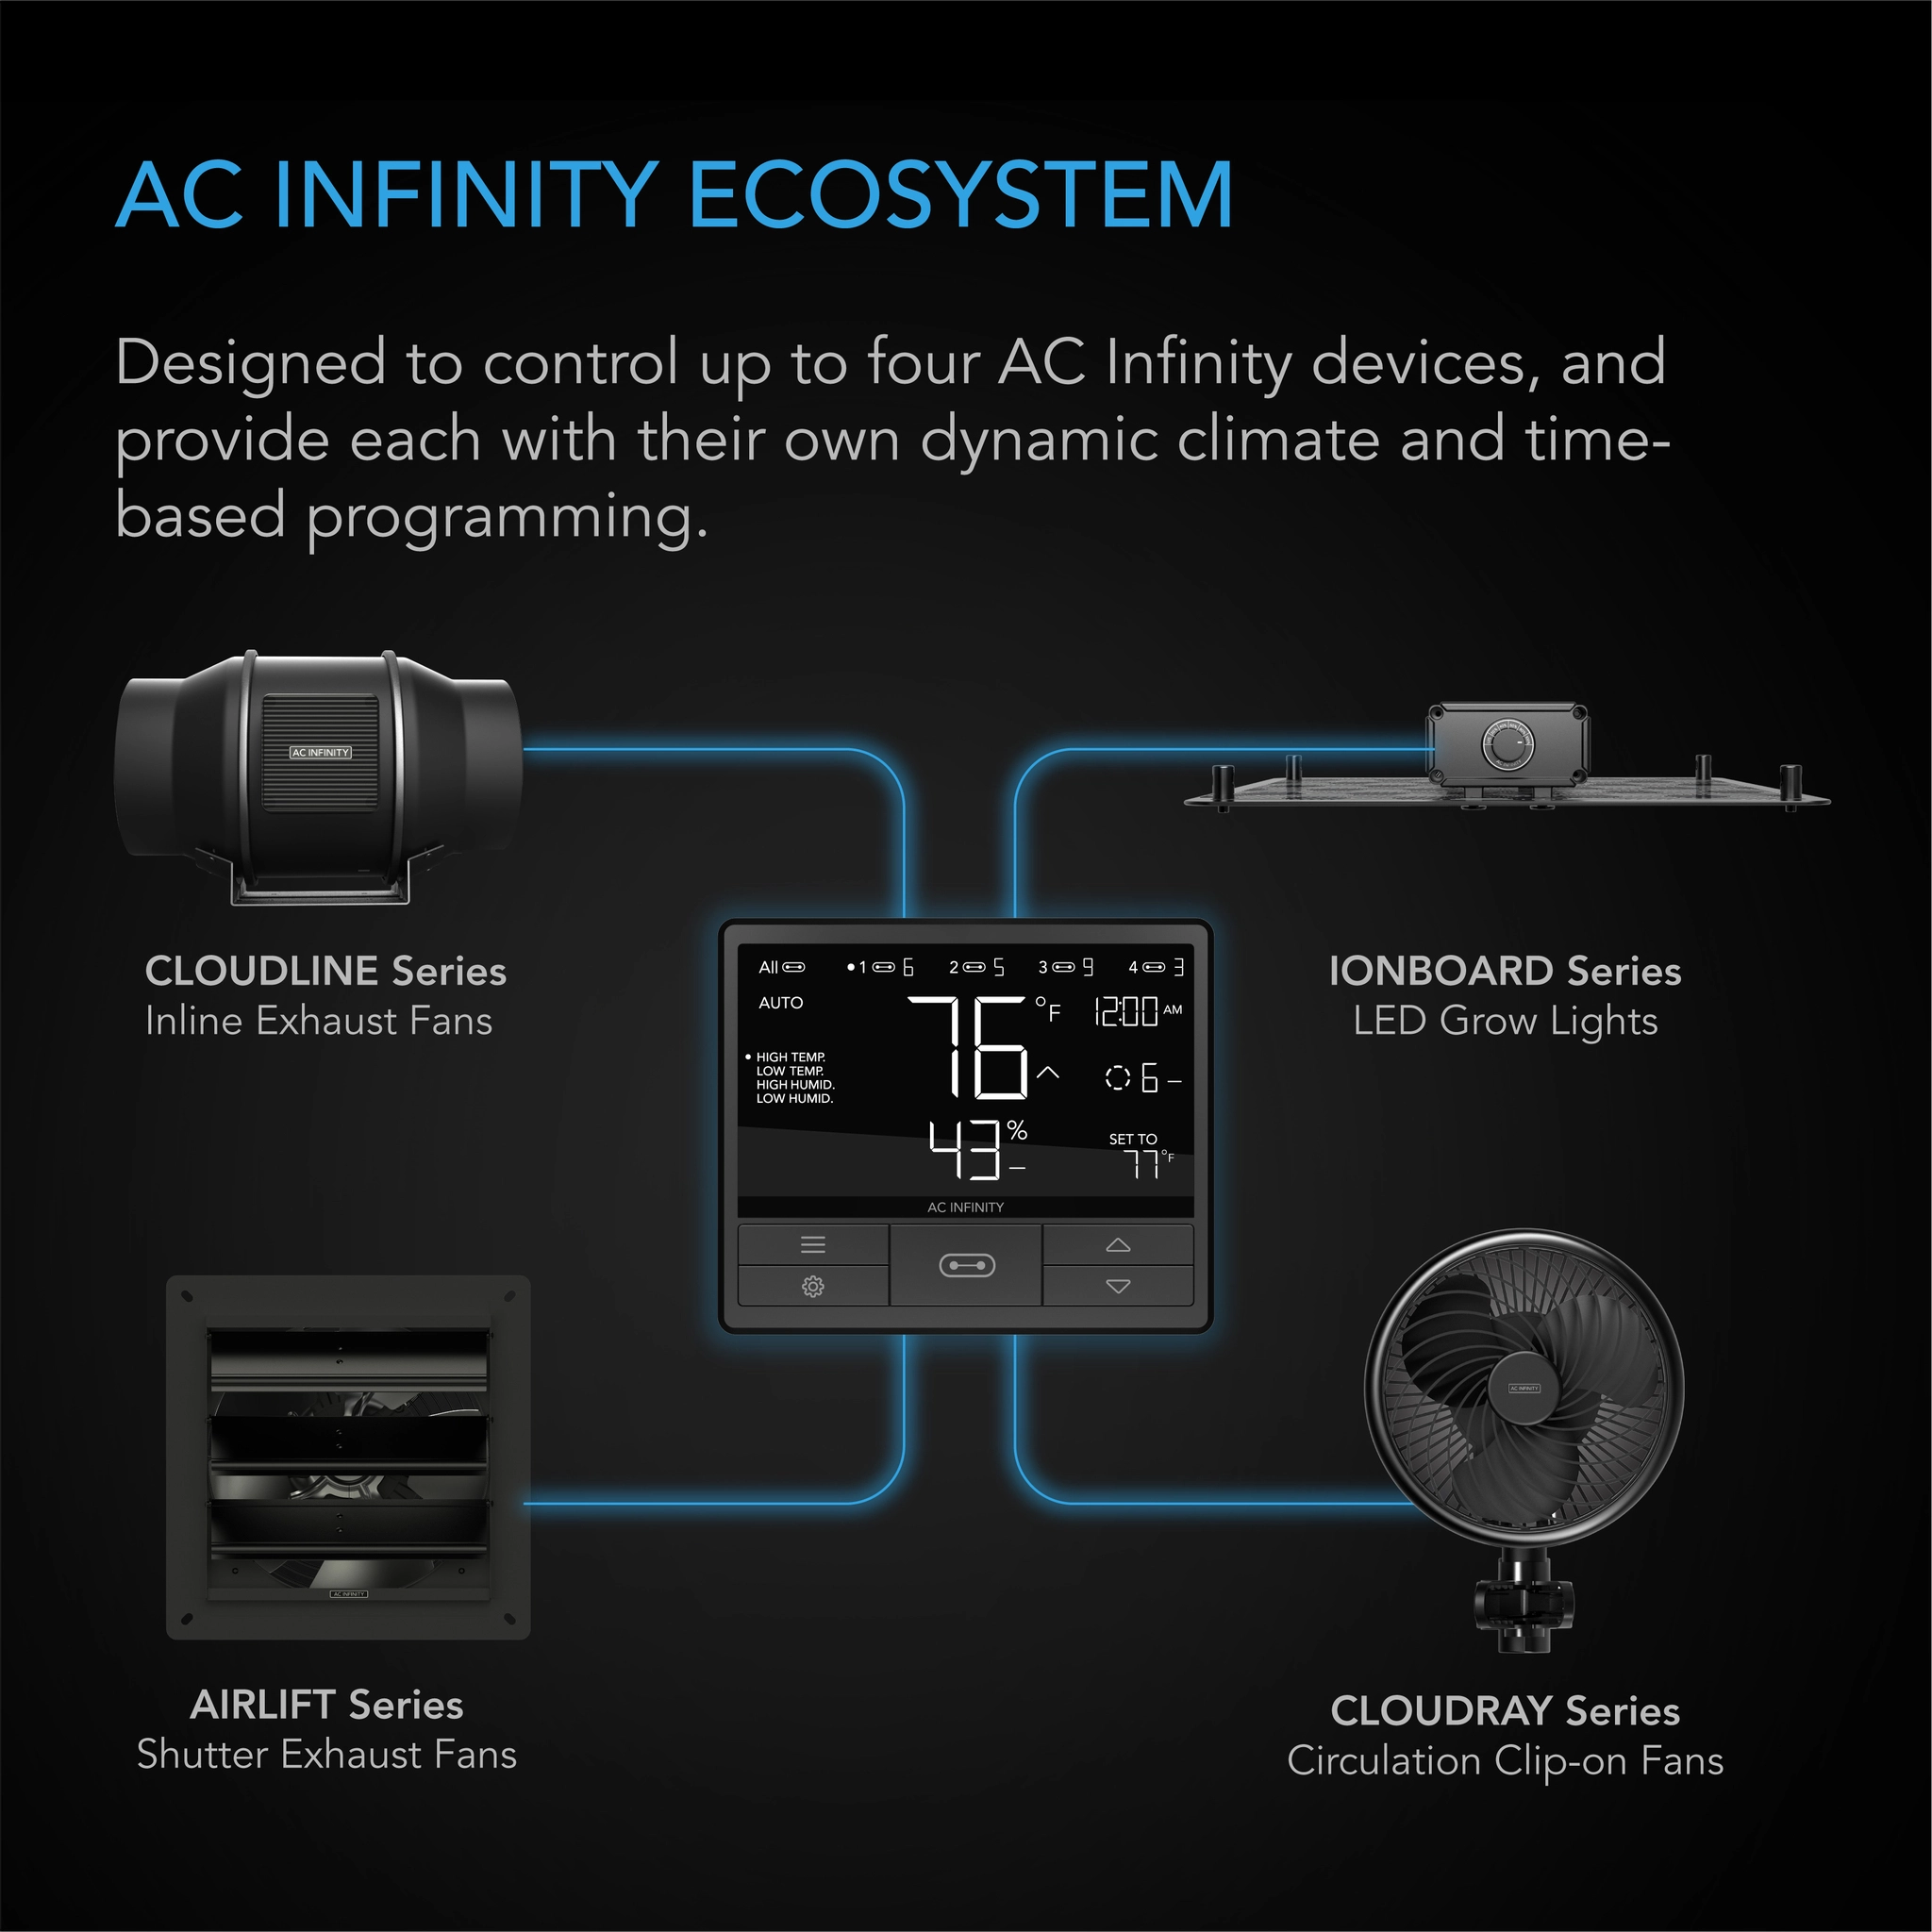 Grow light controller comparison, AC Infinity